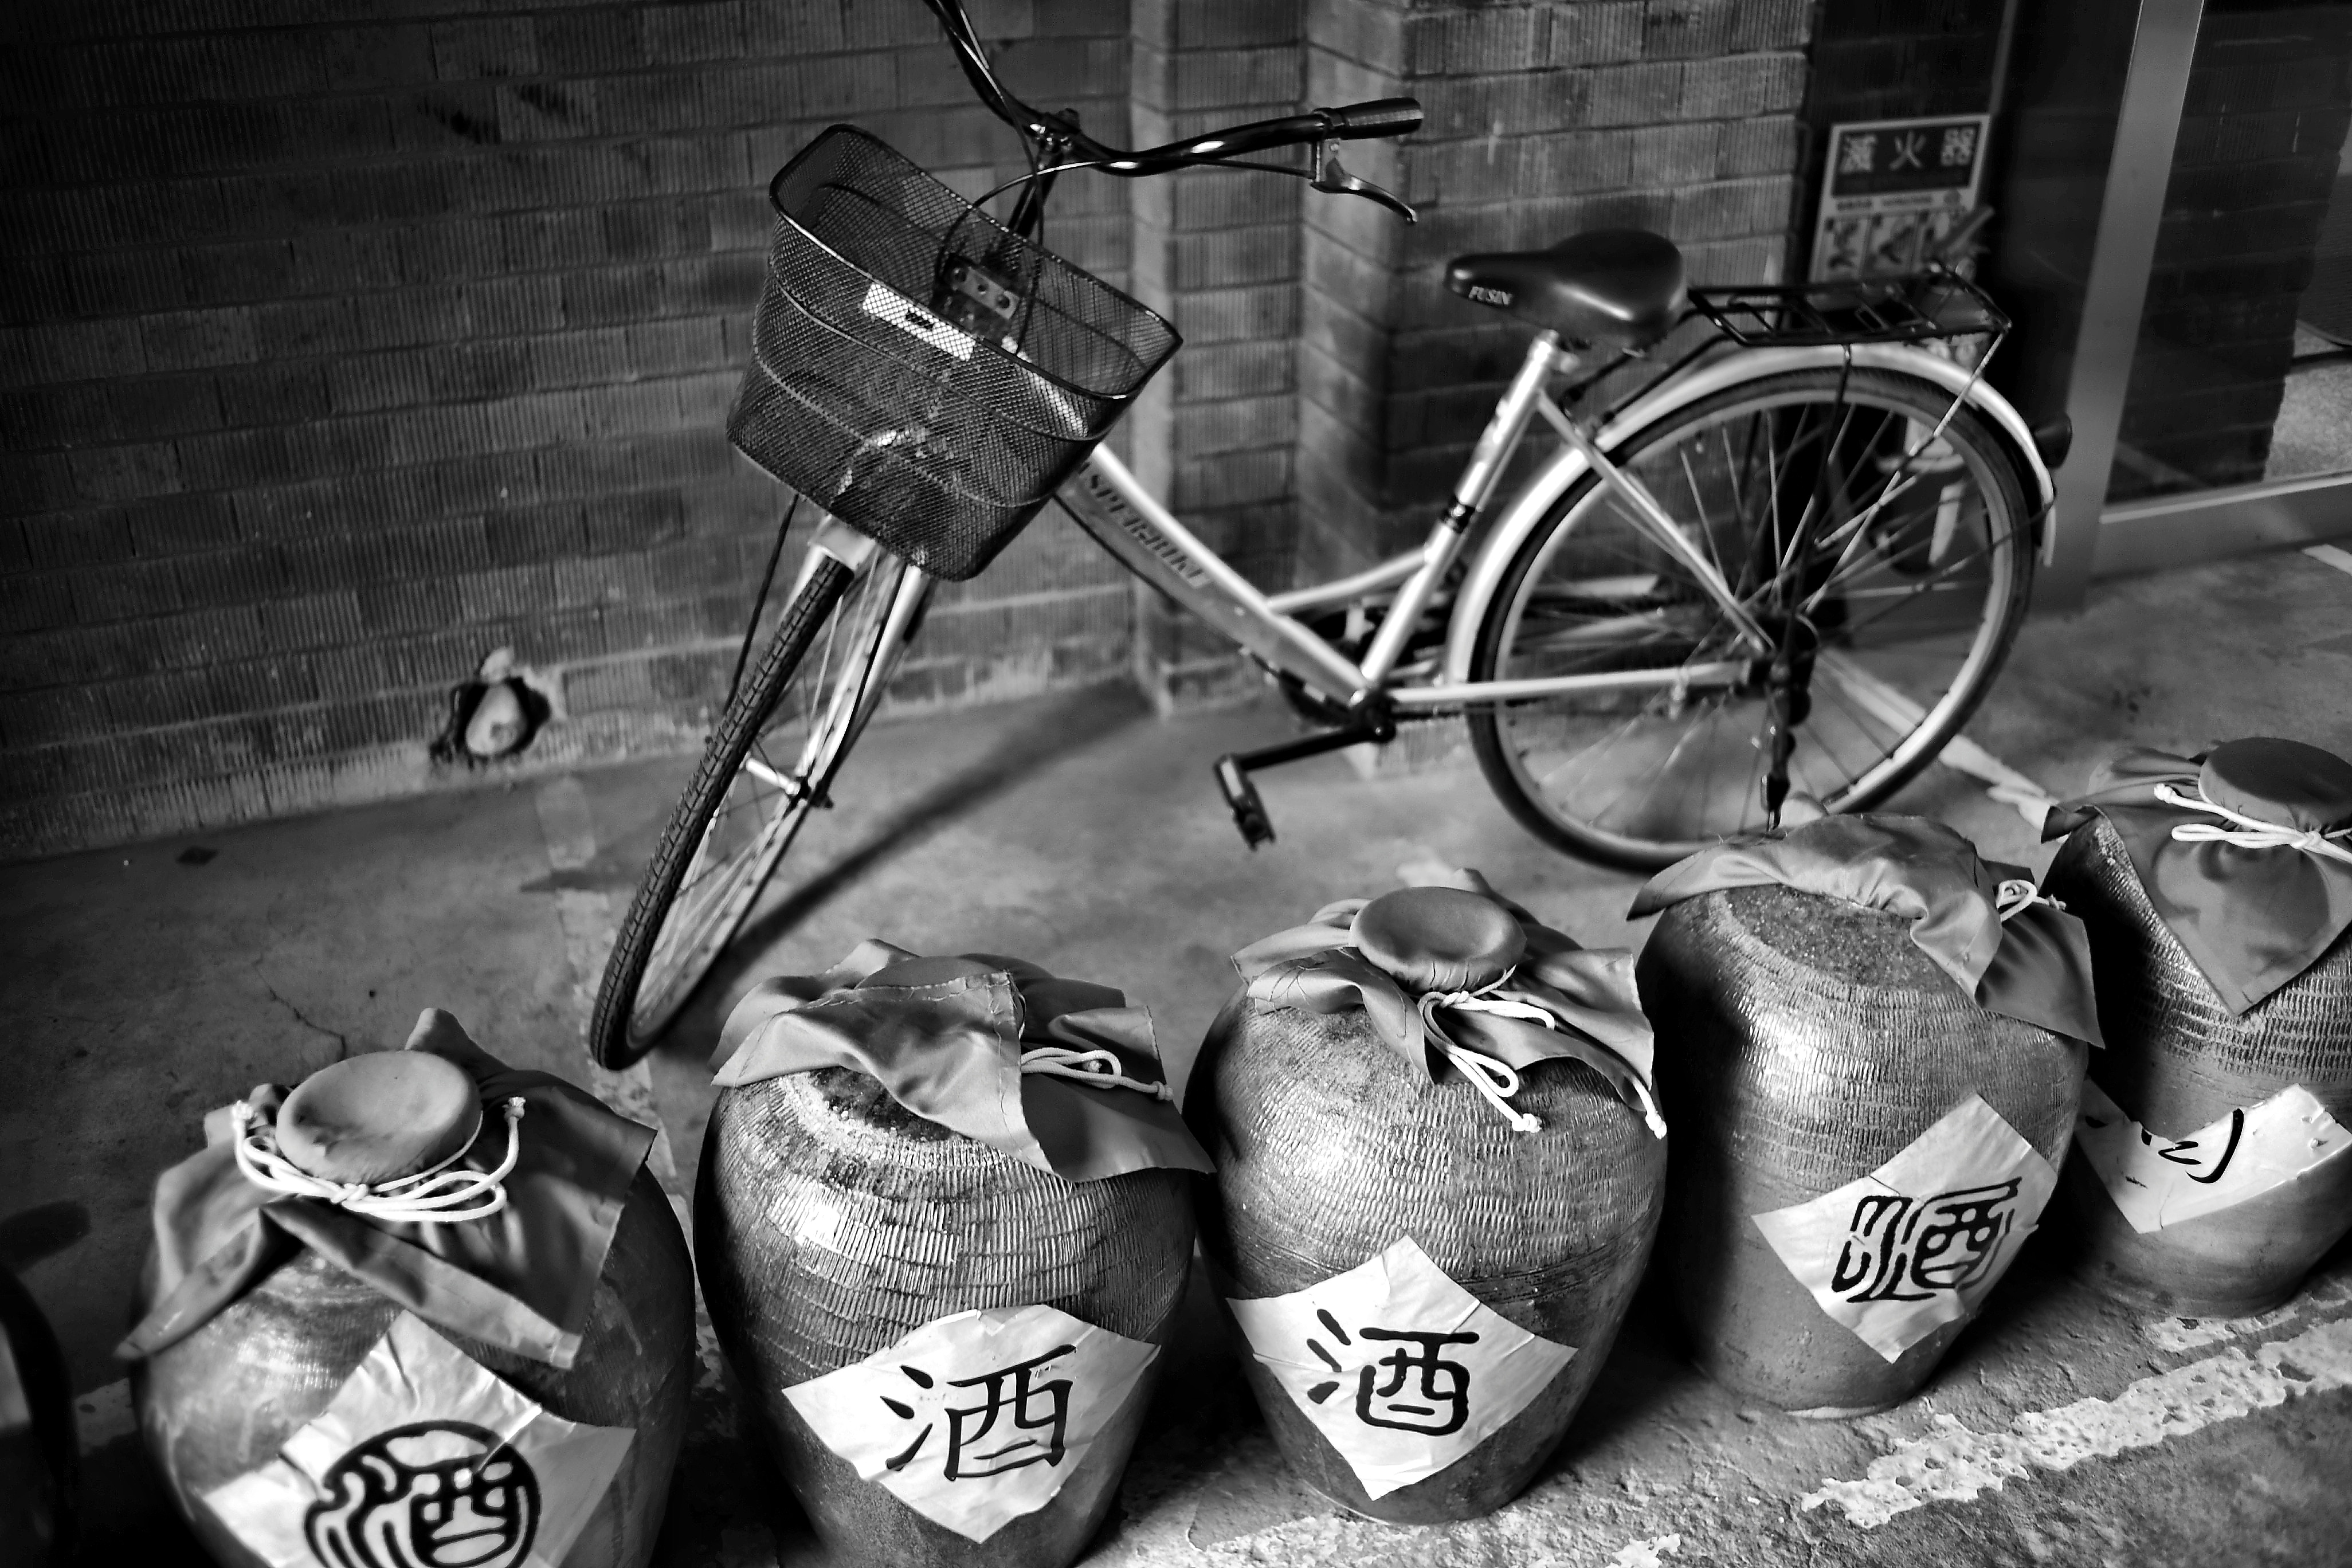 grayscale photo of commuter bike near five terracotta floor vases